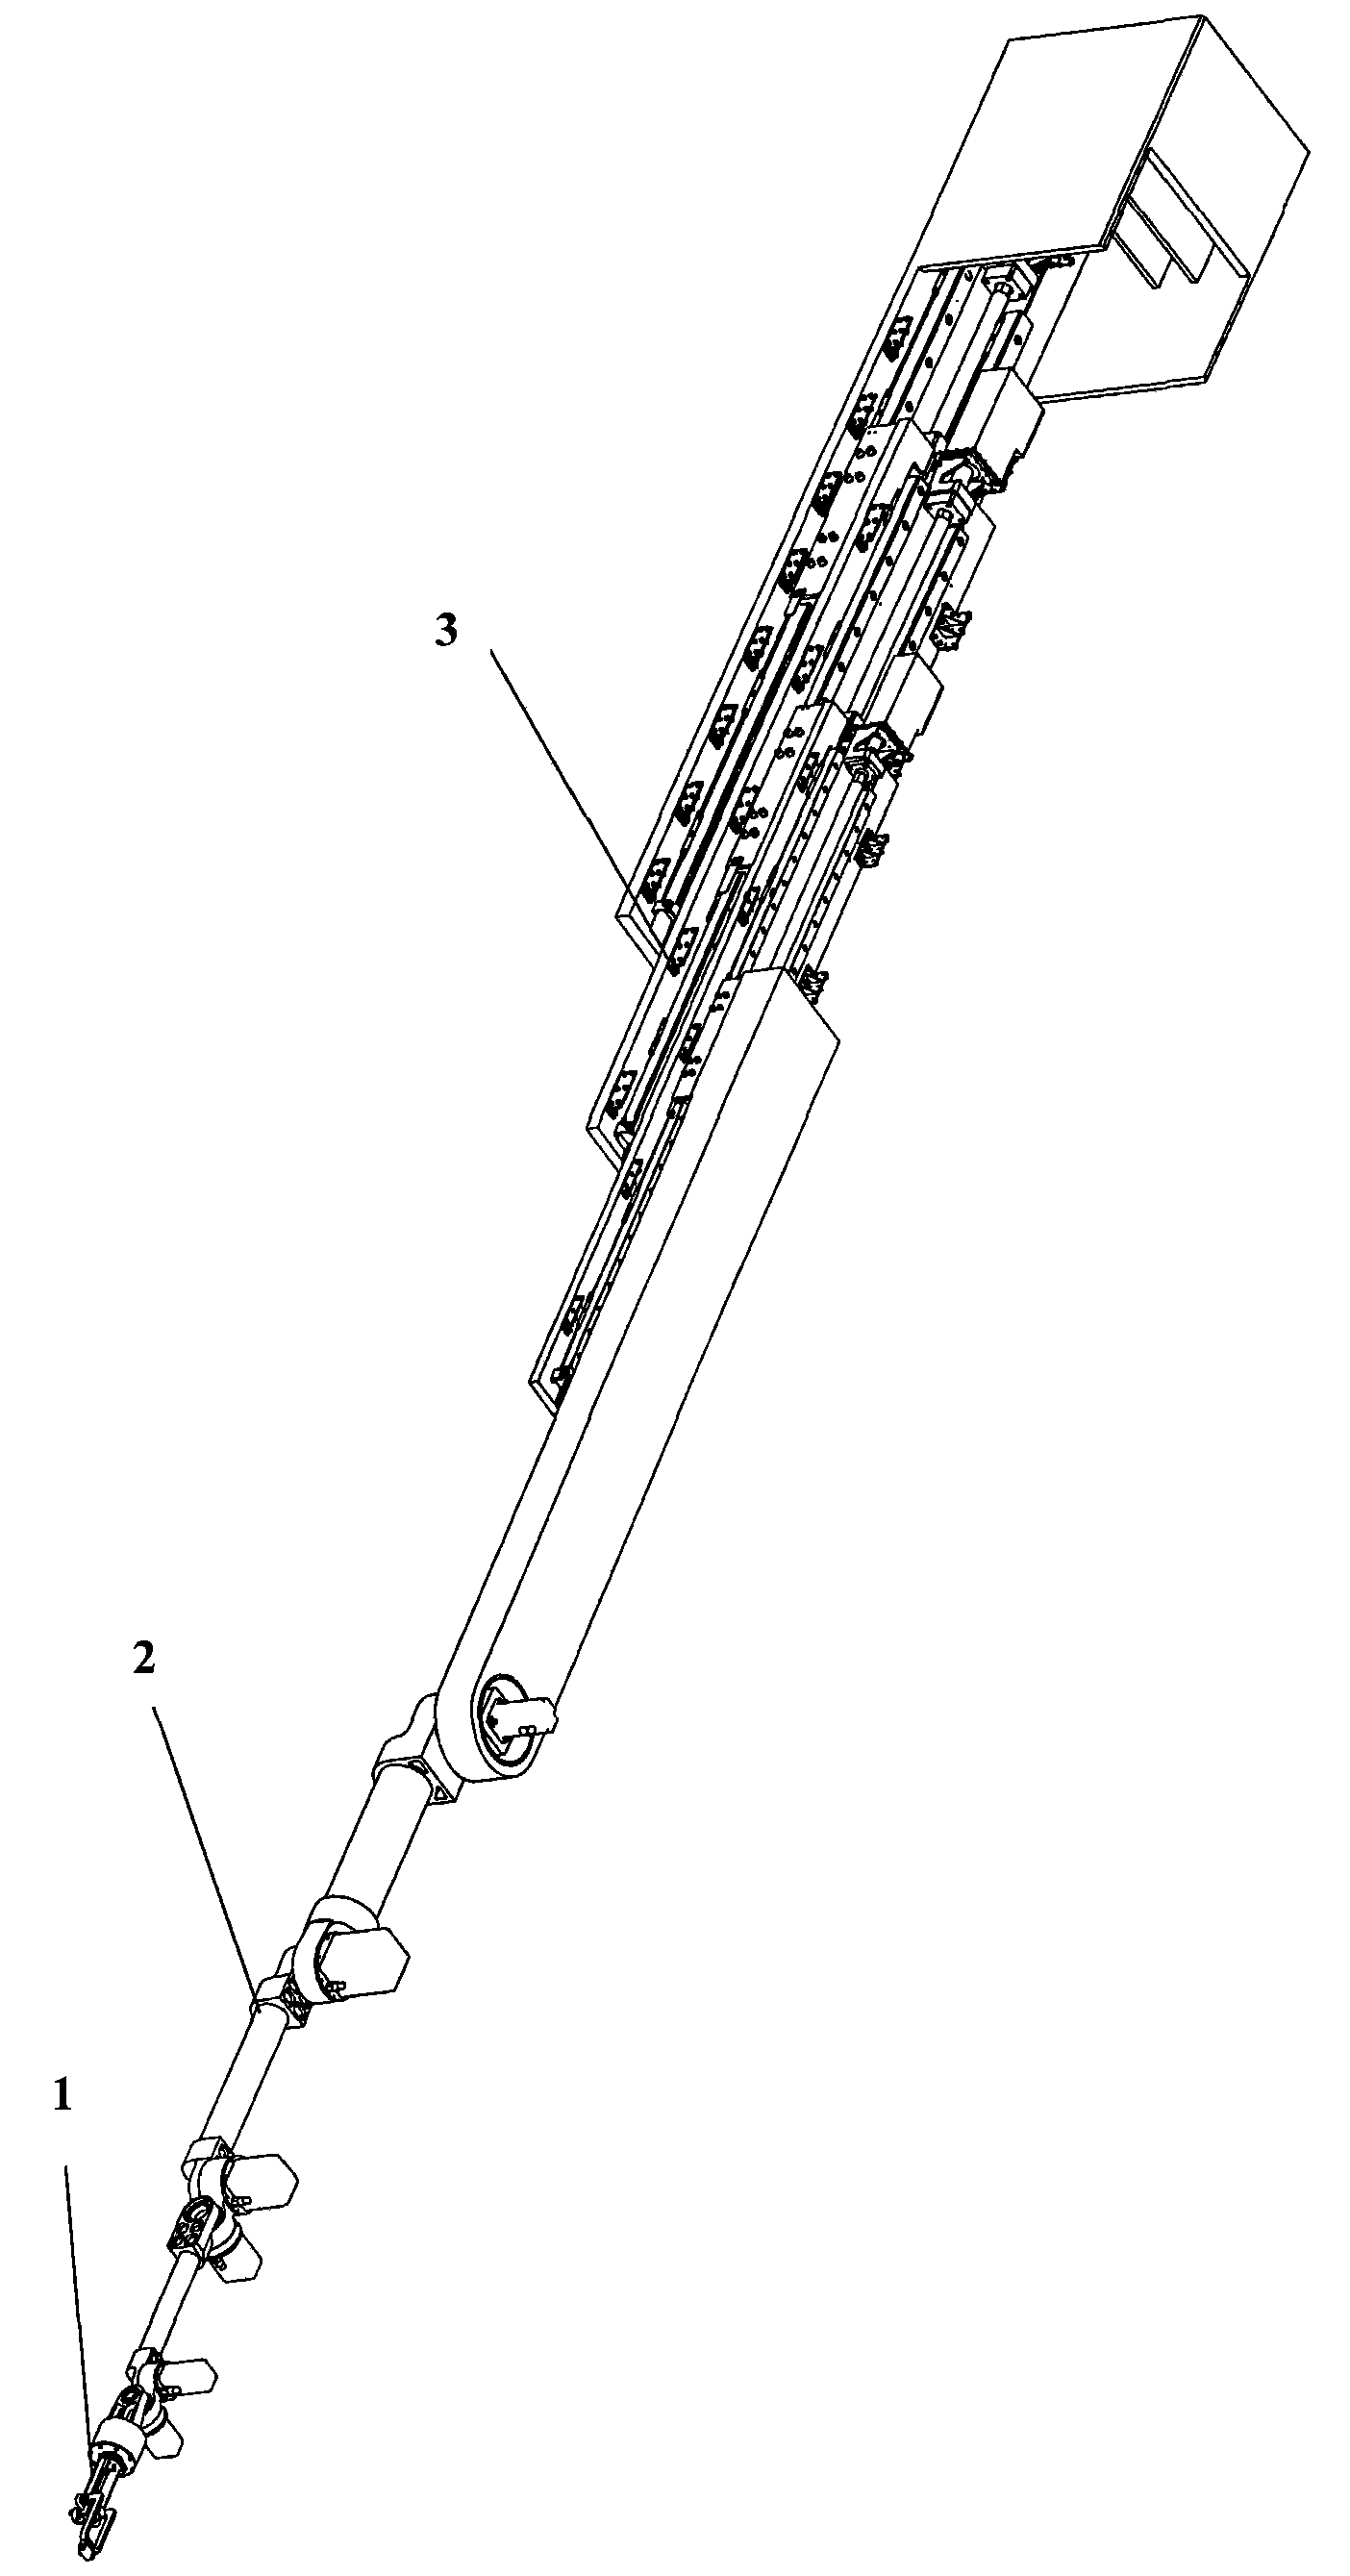 Multi-stage telescopic redundant manipulator